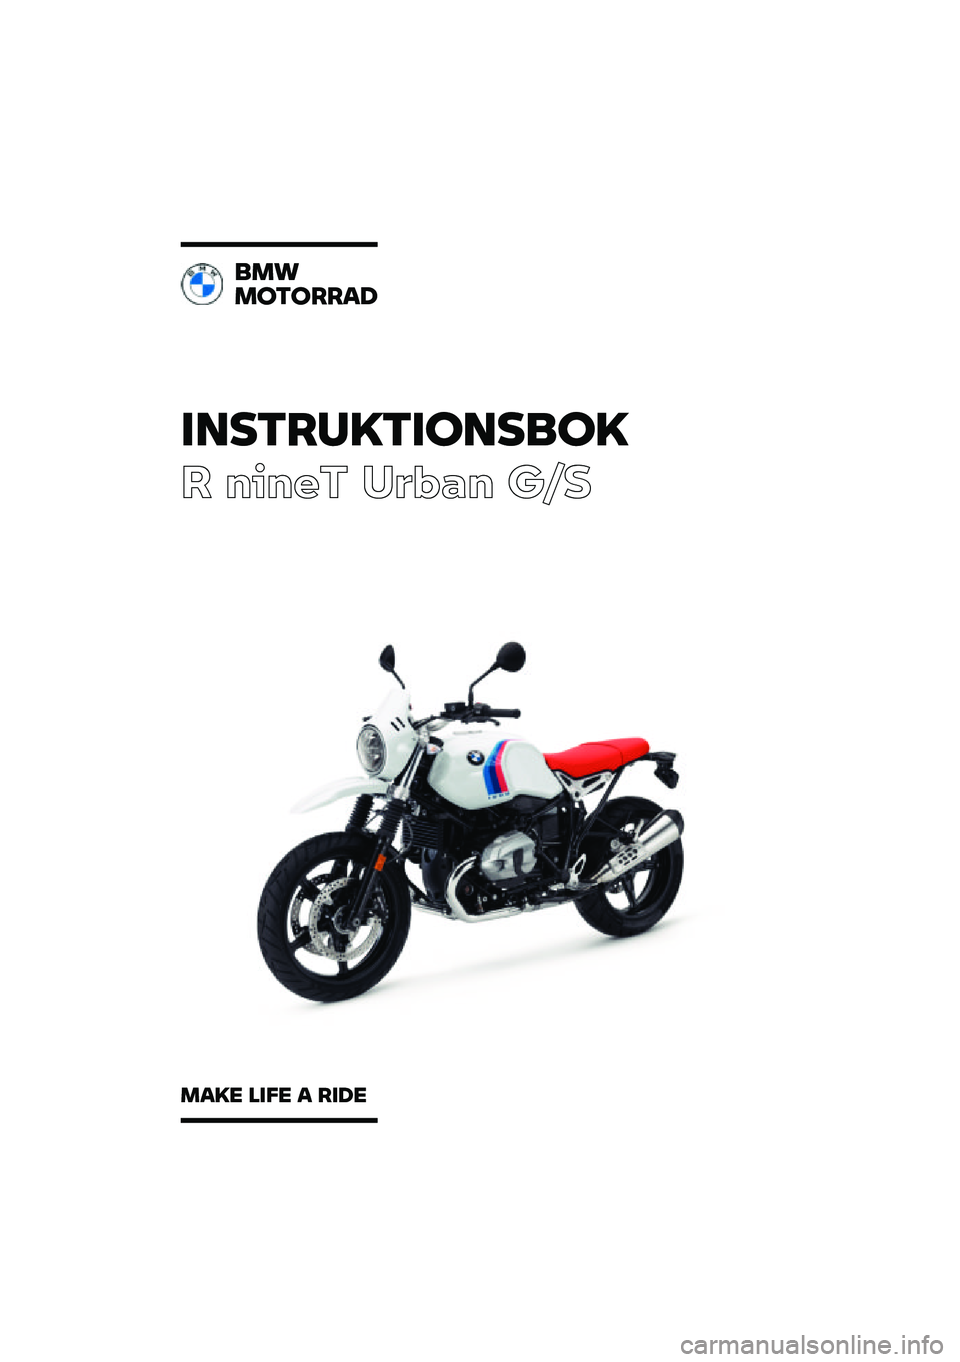 BMW MOTORRAD R NINE T URVAN G/S 2021  Instruktionsbok (in Swedish) �������\b���	���
�	�\b
� ����� ��\b�	�
� ��\f�
�
��\f
��	��	���
�
��
�\b� ���� �
 ���� 